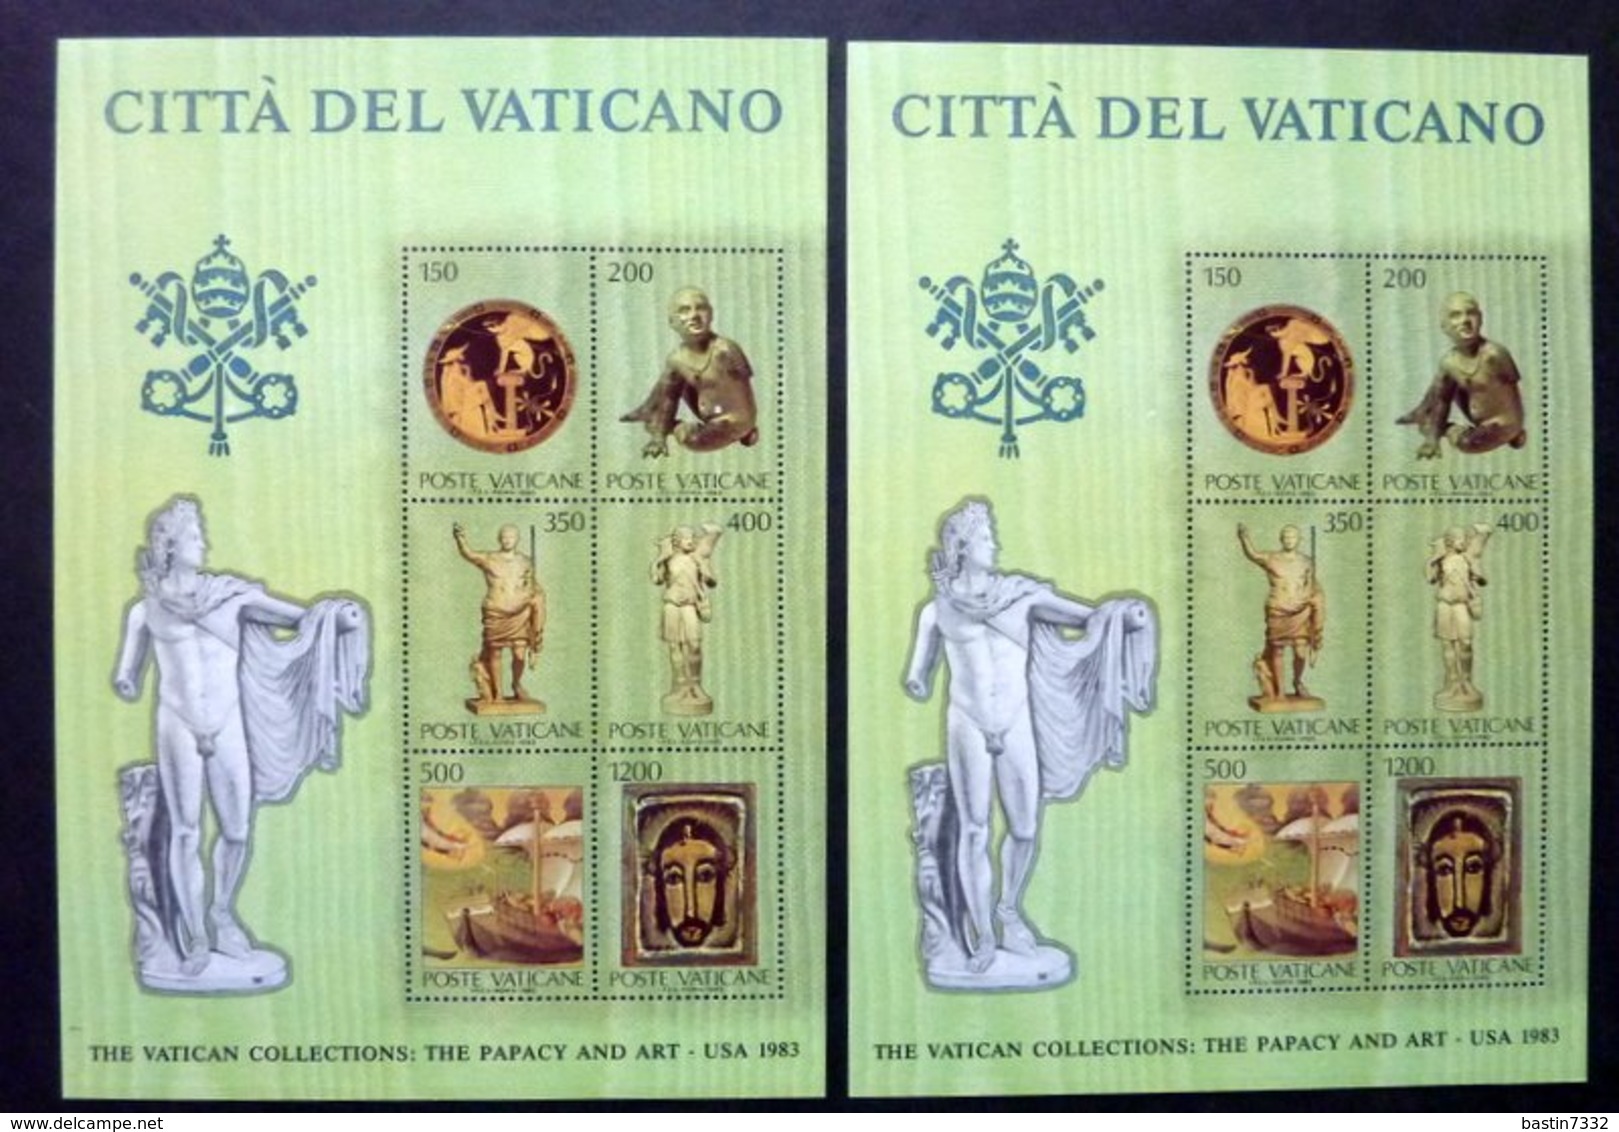 Vaticano/Vaticaan 1960-1981 in Lindner + Germany/Austria in stockbook Mint/Postfris/Neuf sans charniere